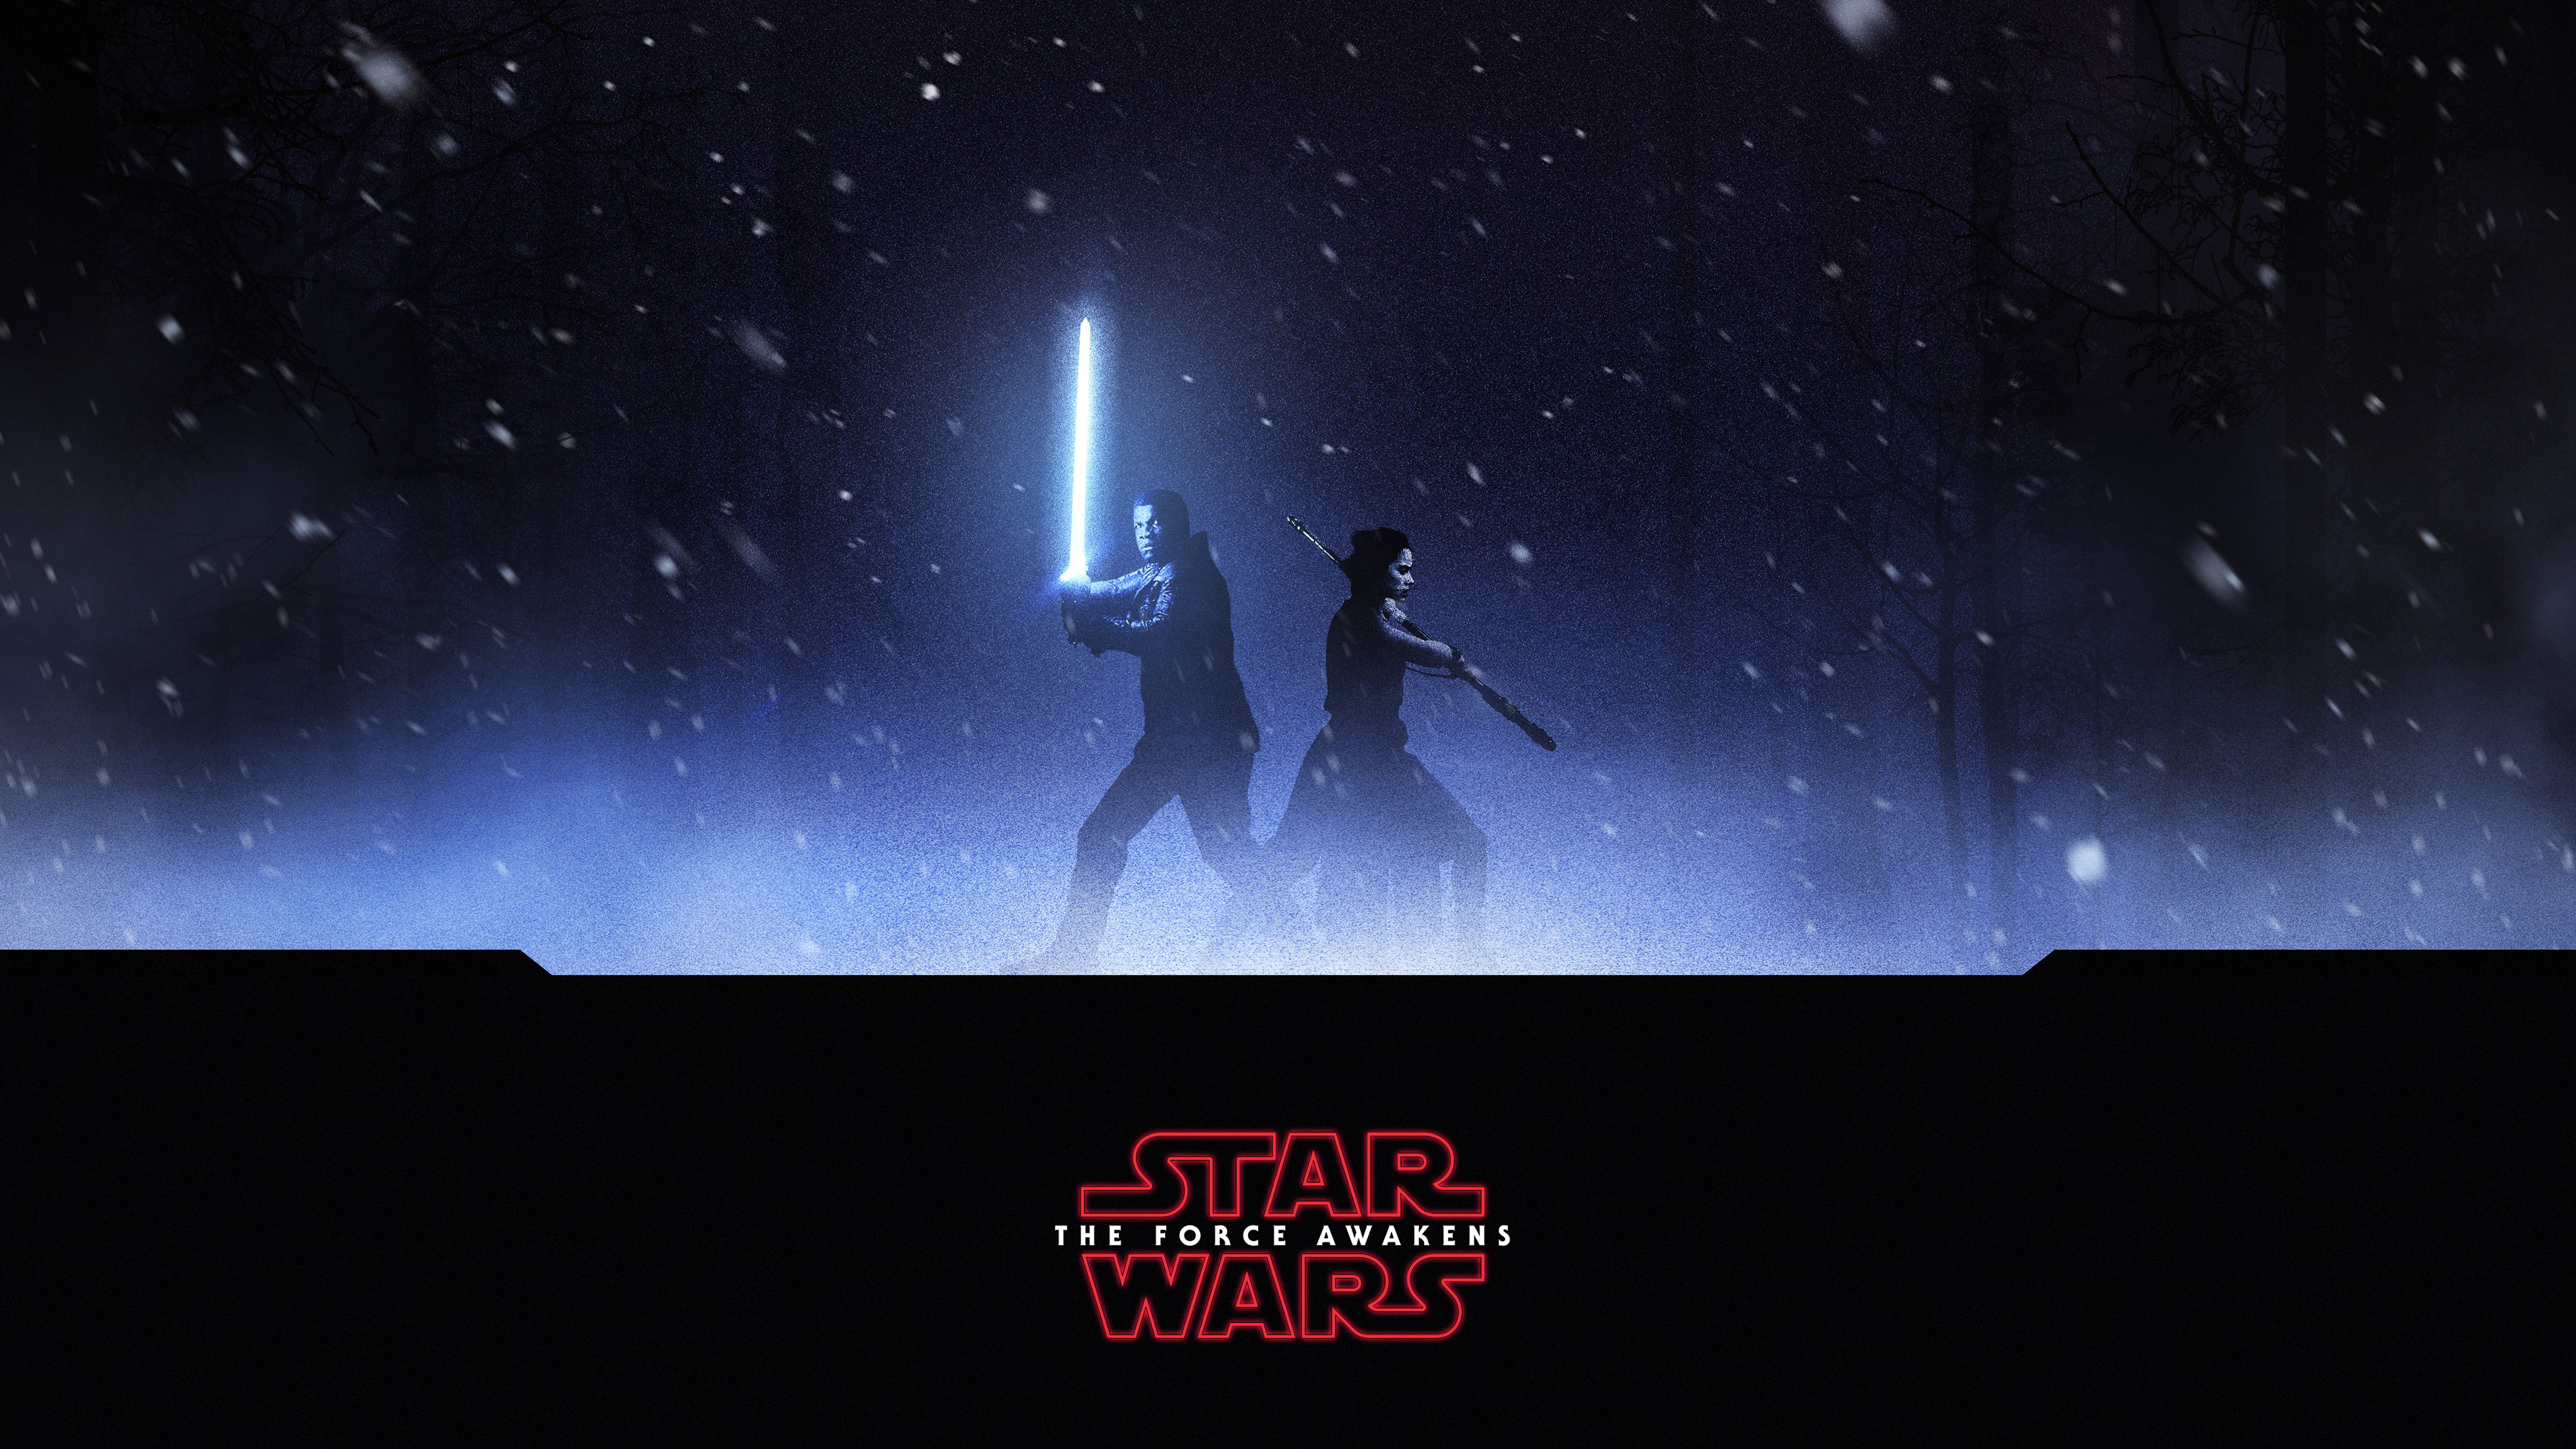 Finn Star Wars Lightsaber Rey Star Wars Star Wars Star Wars Episode Vii The Force Awakens 5120x2880